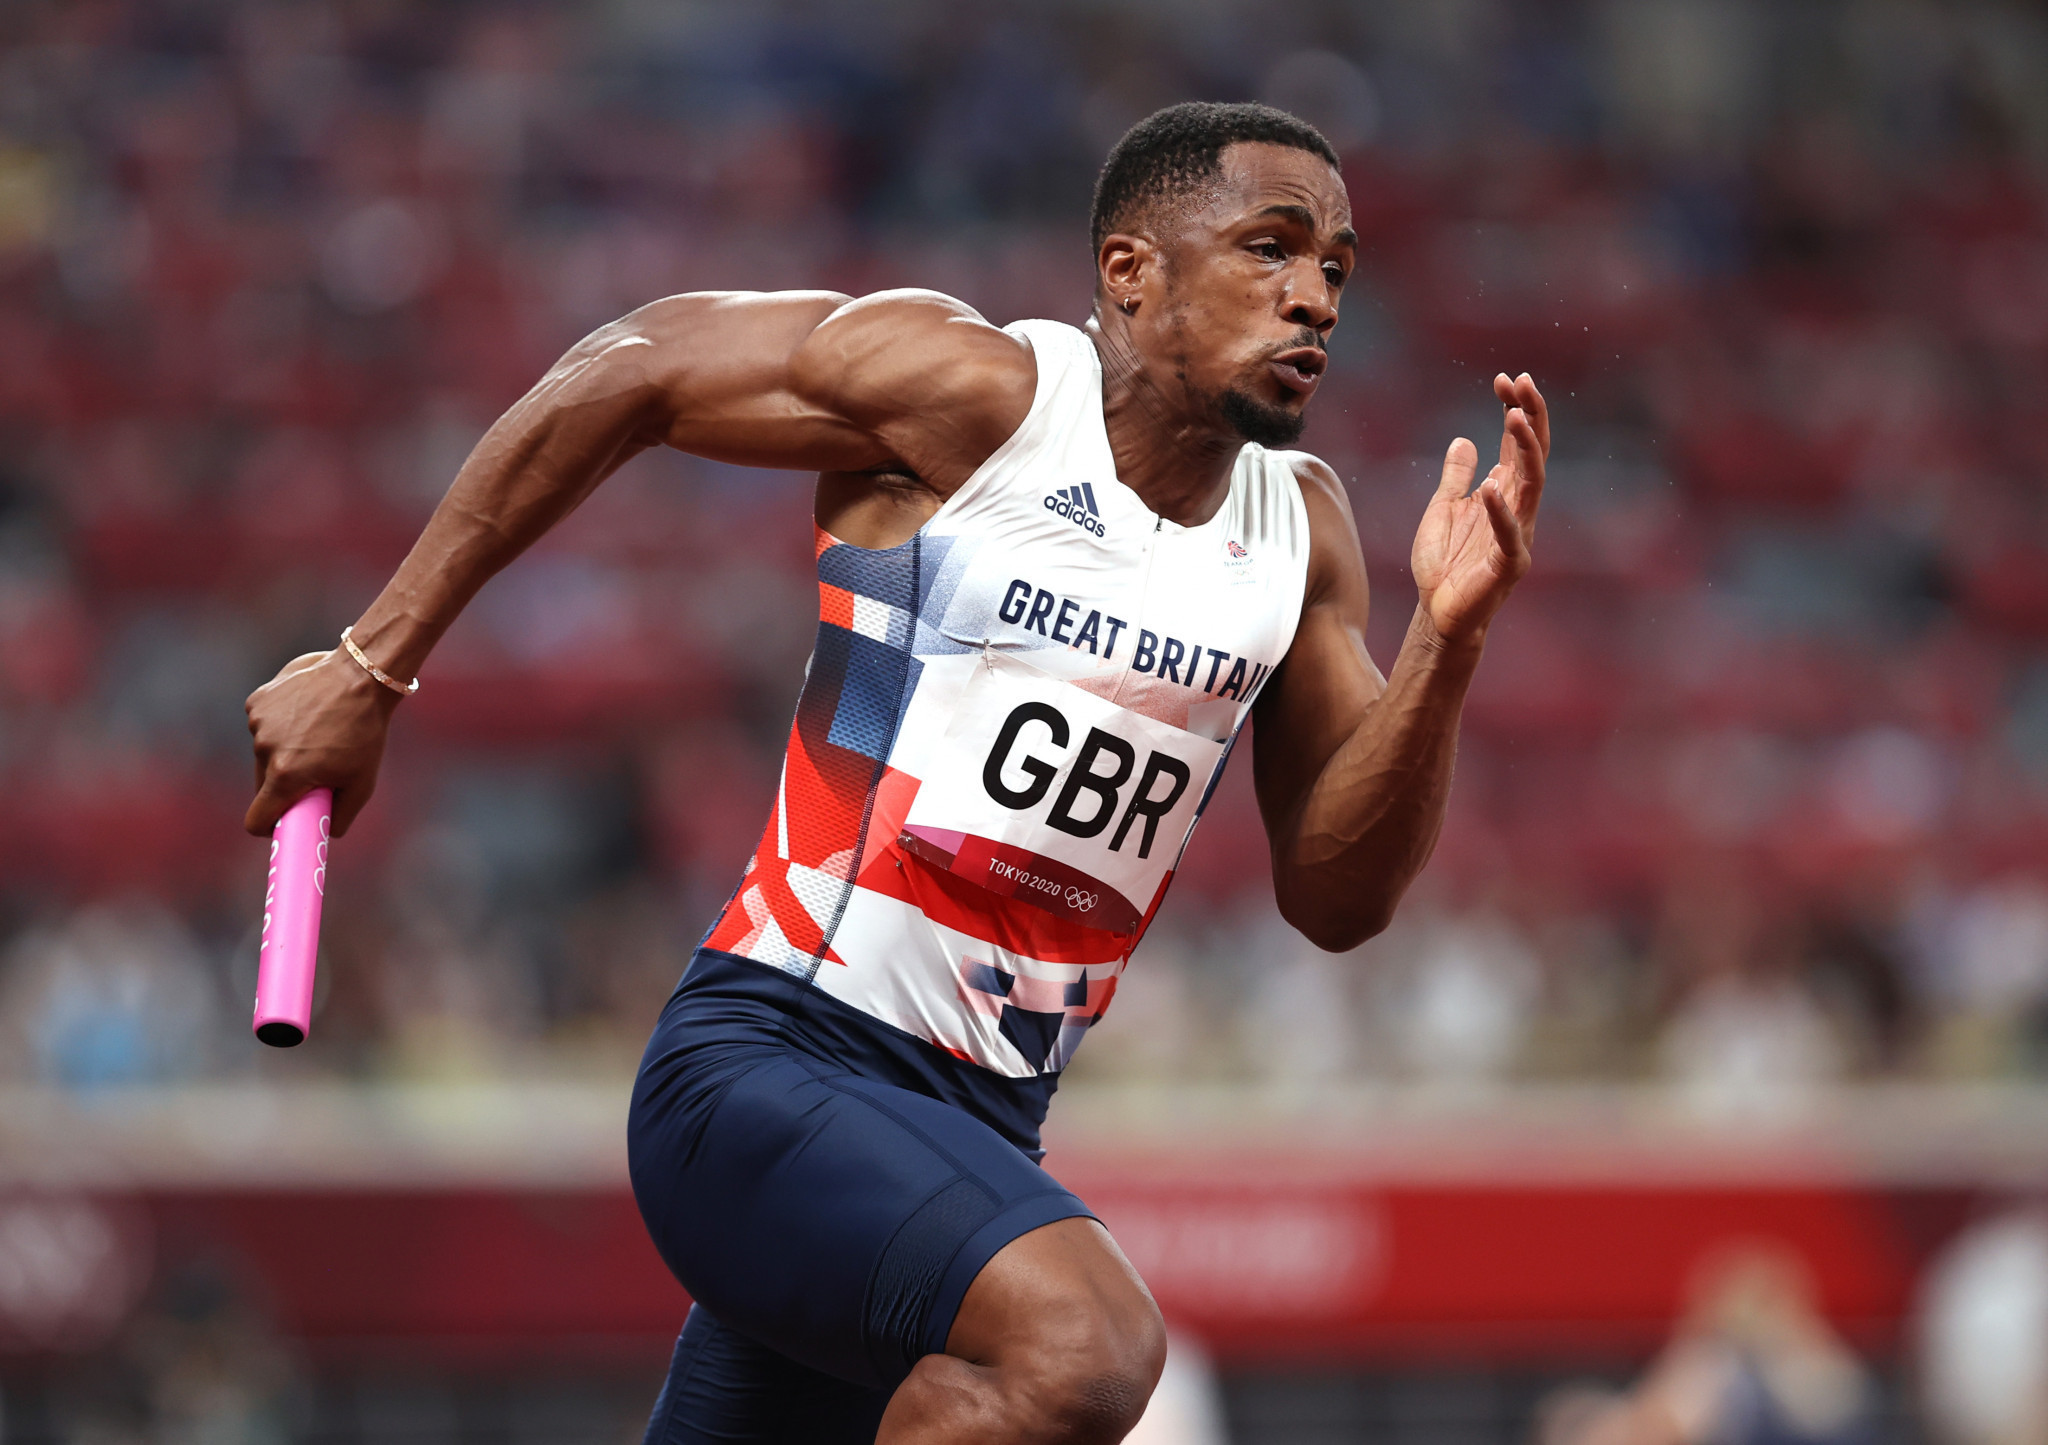 Britain lose Tokyo 2020 relay silver medal as CAS confirms Ujah broke doping rules